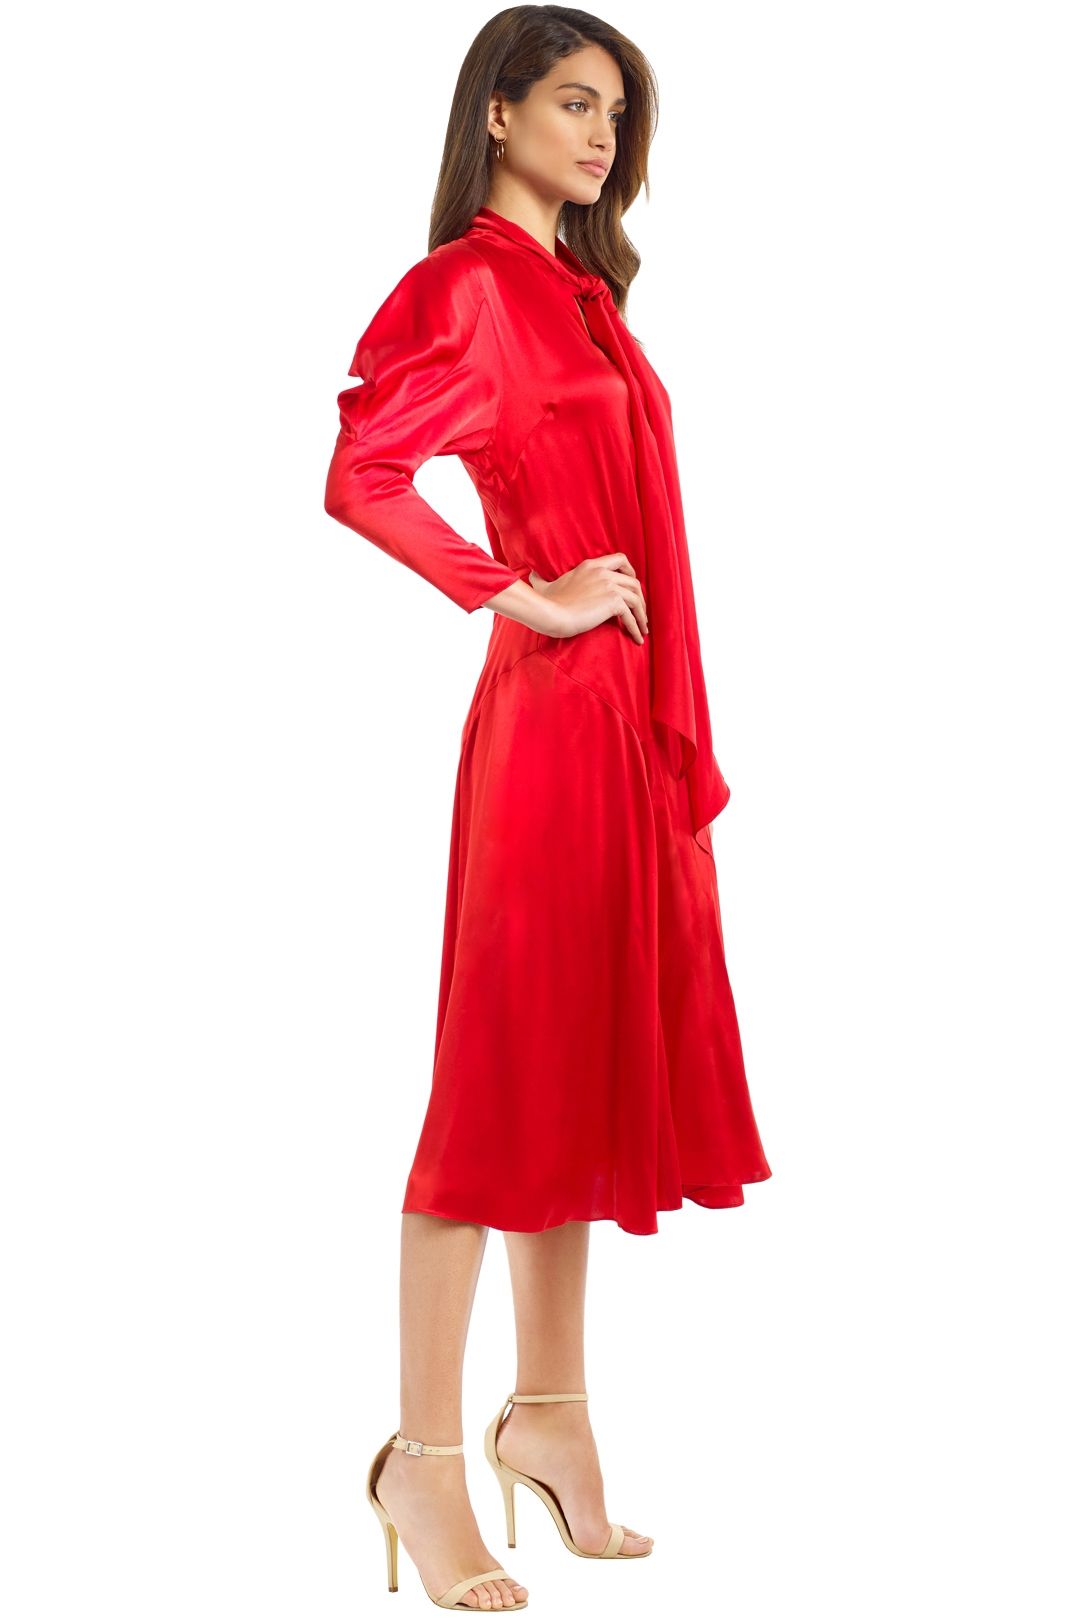 Bianca Spender - Crimson Silk Satin Liberation Dress - Red - Side